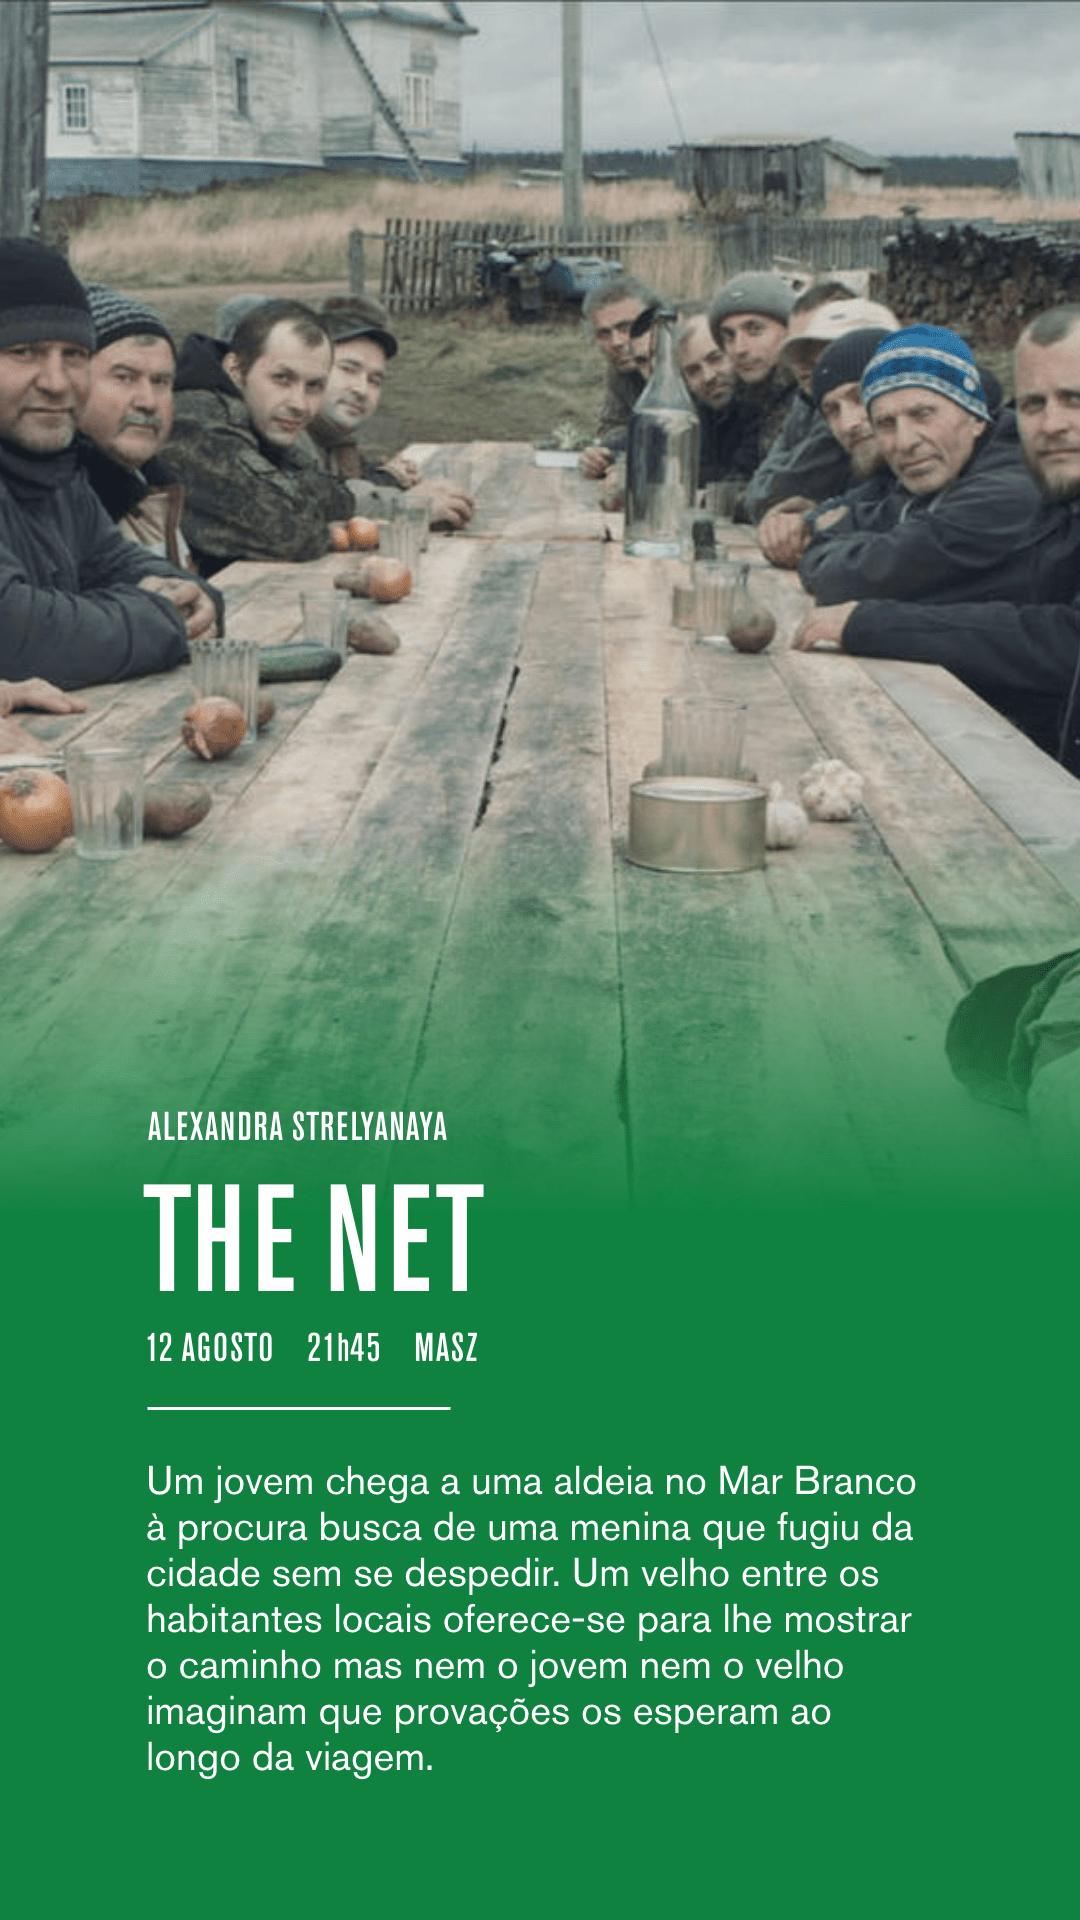 The Net Instastory 2